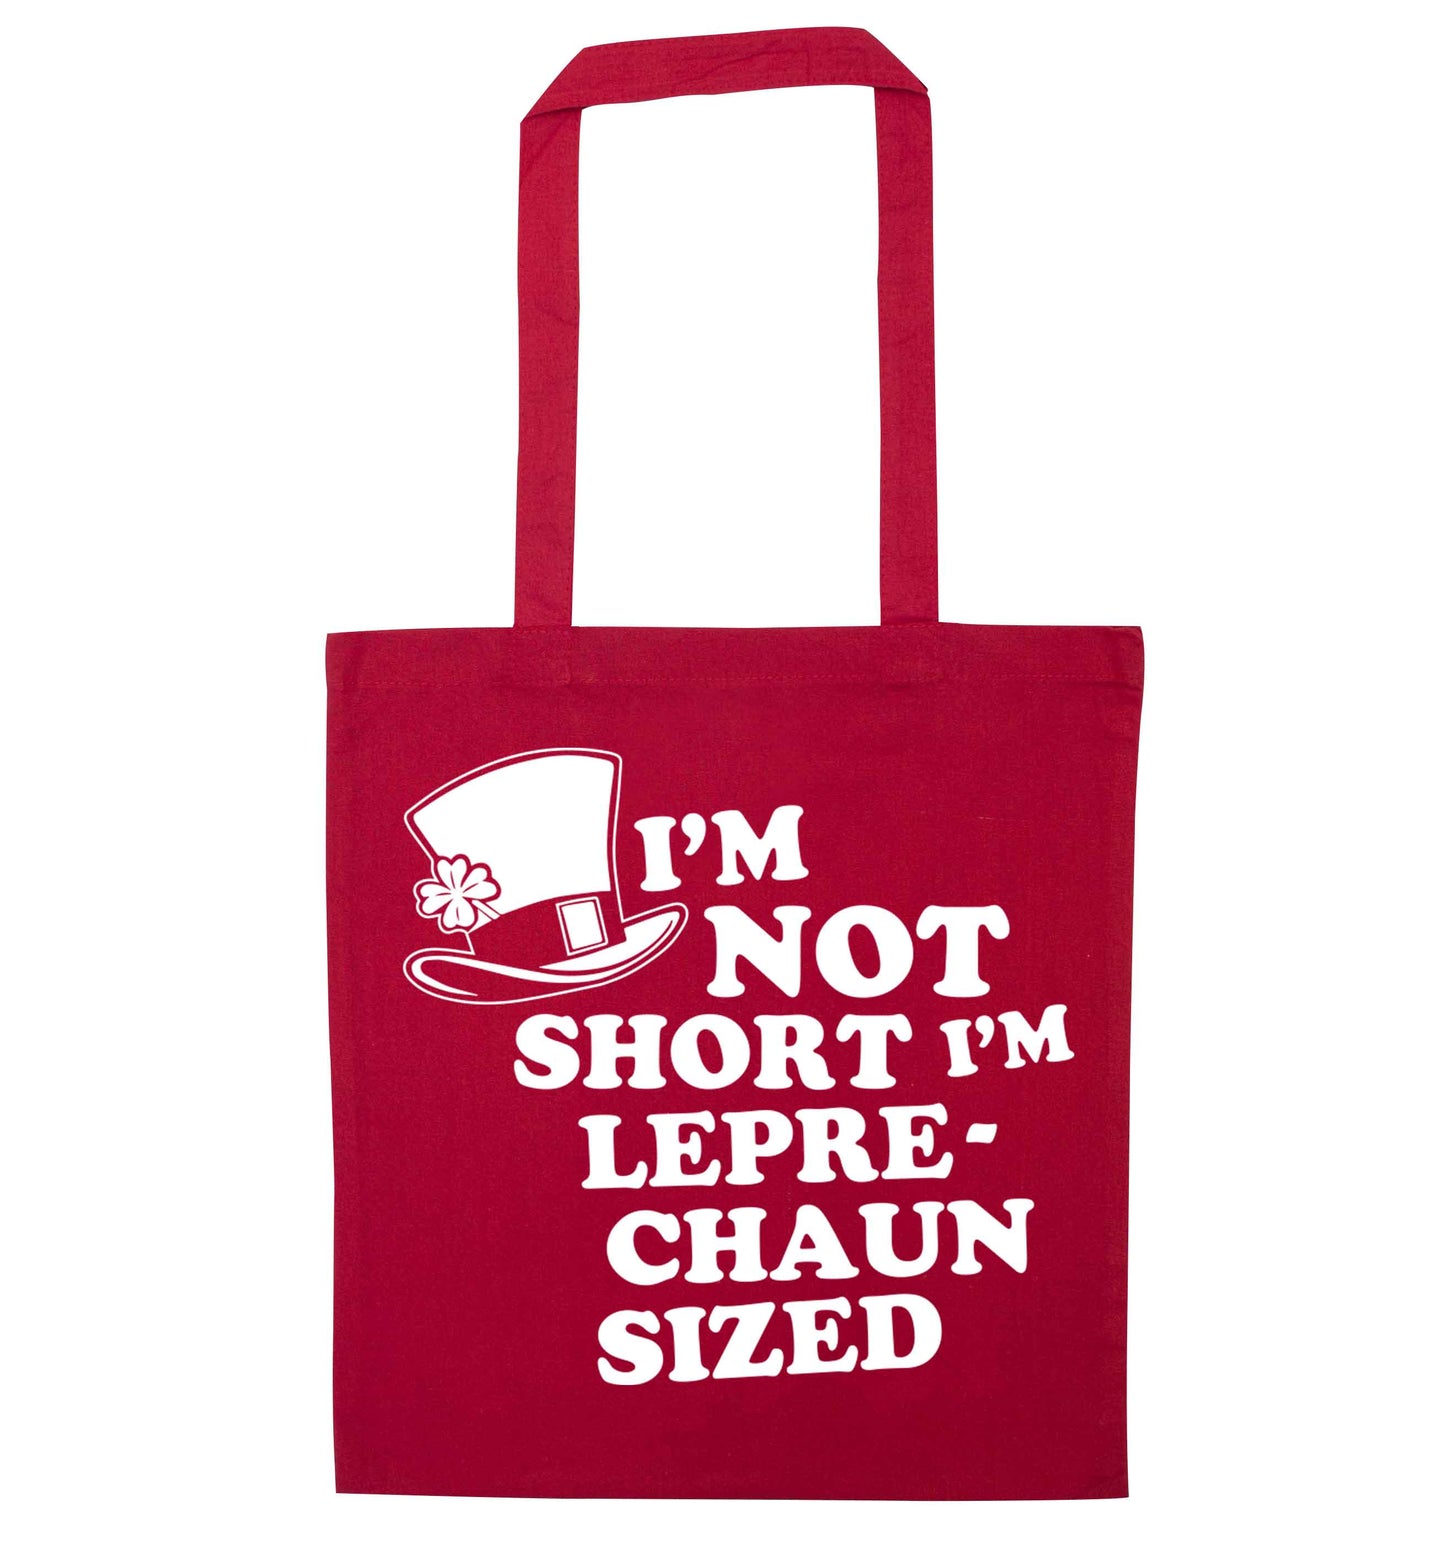 I'm not short I'm leprechaun sized red tote bag